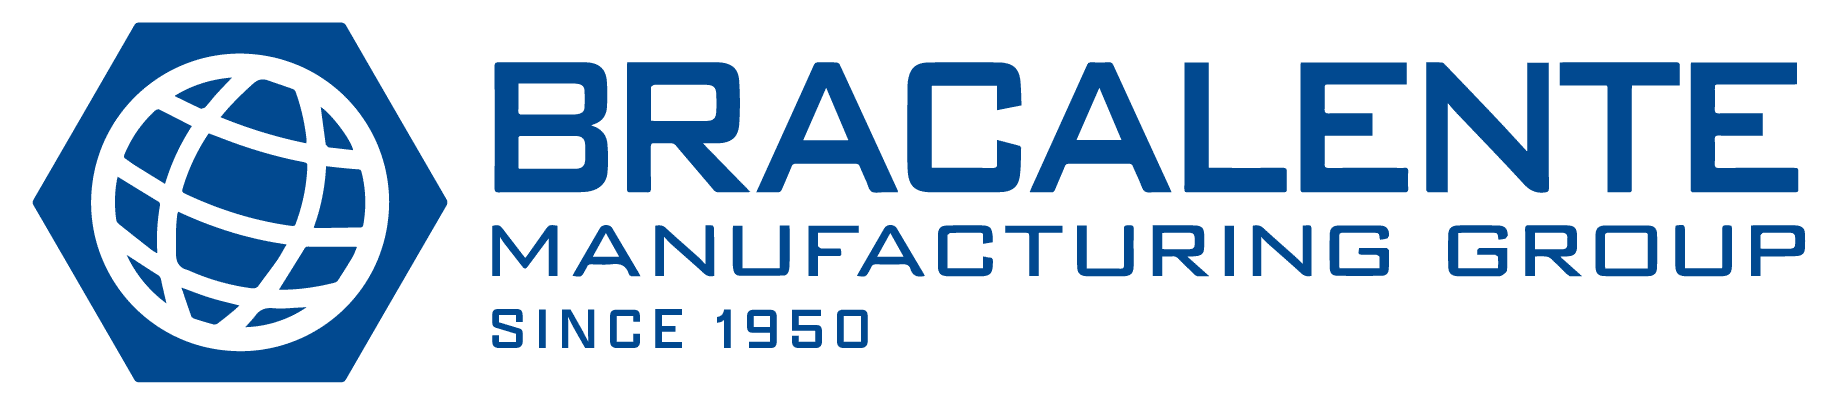 Bracalente Manufacturing Group siden 1950